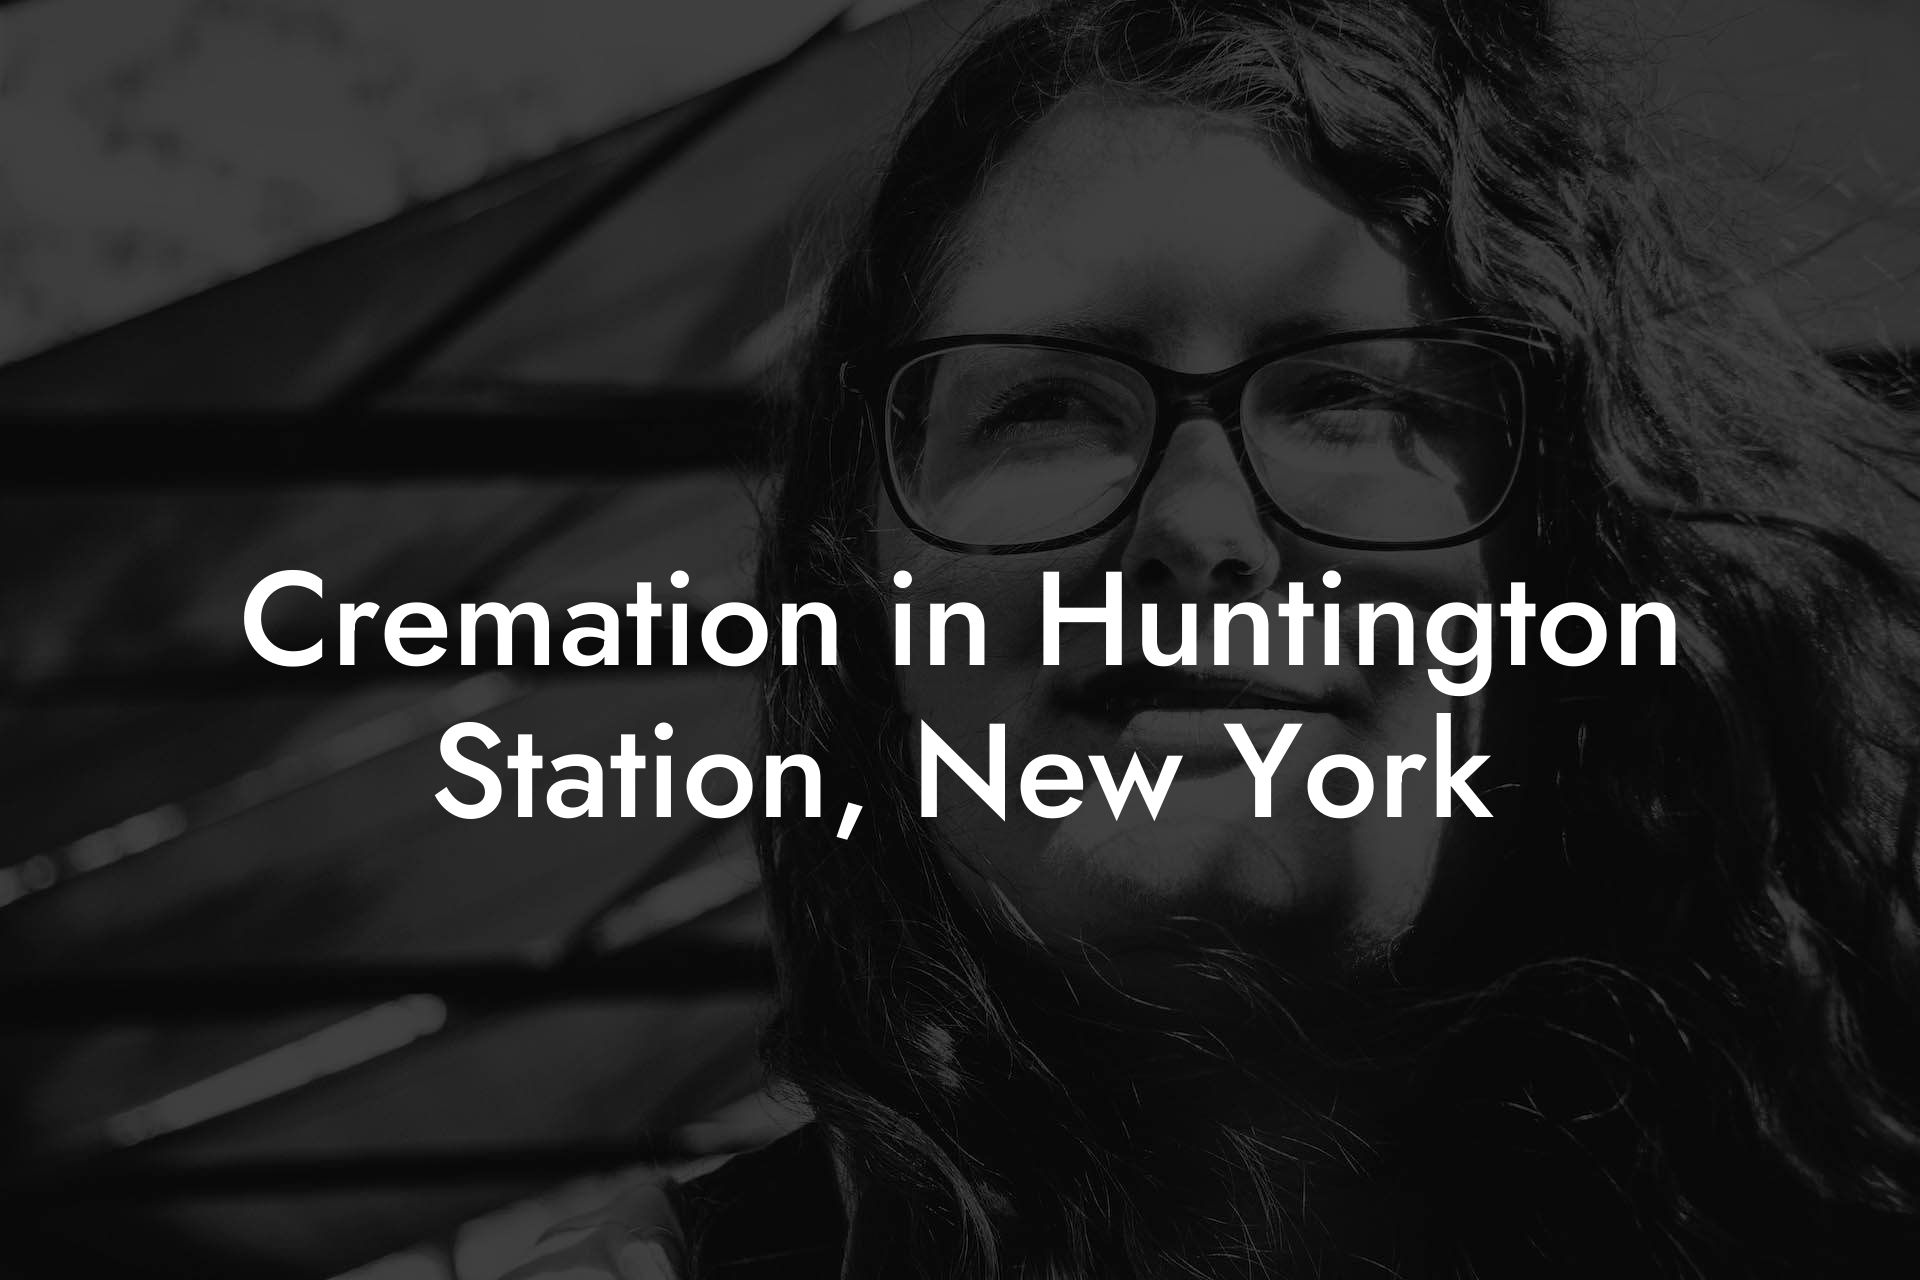 Cremation in Huntington Station, New York